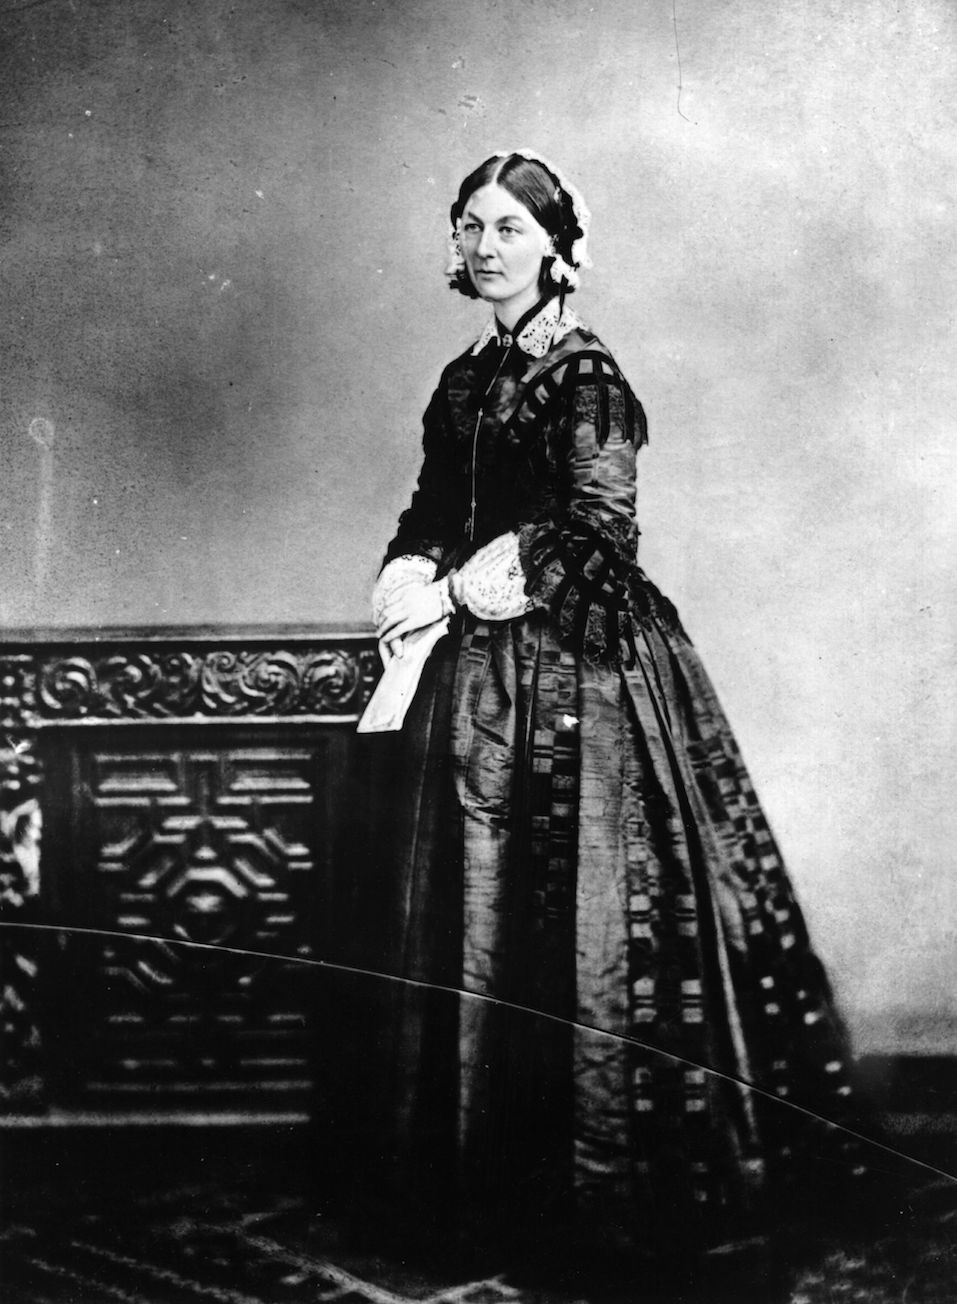 English nurse, hospital reformer and philanthropist Florence Nightingale